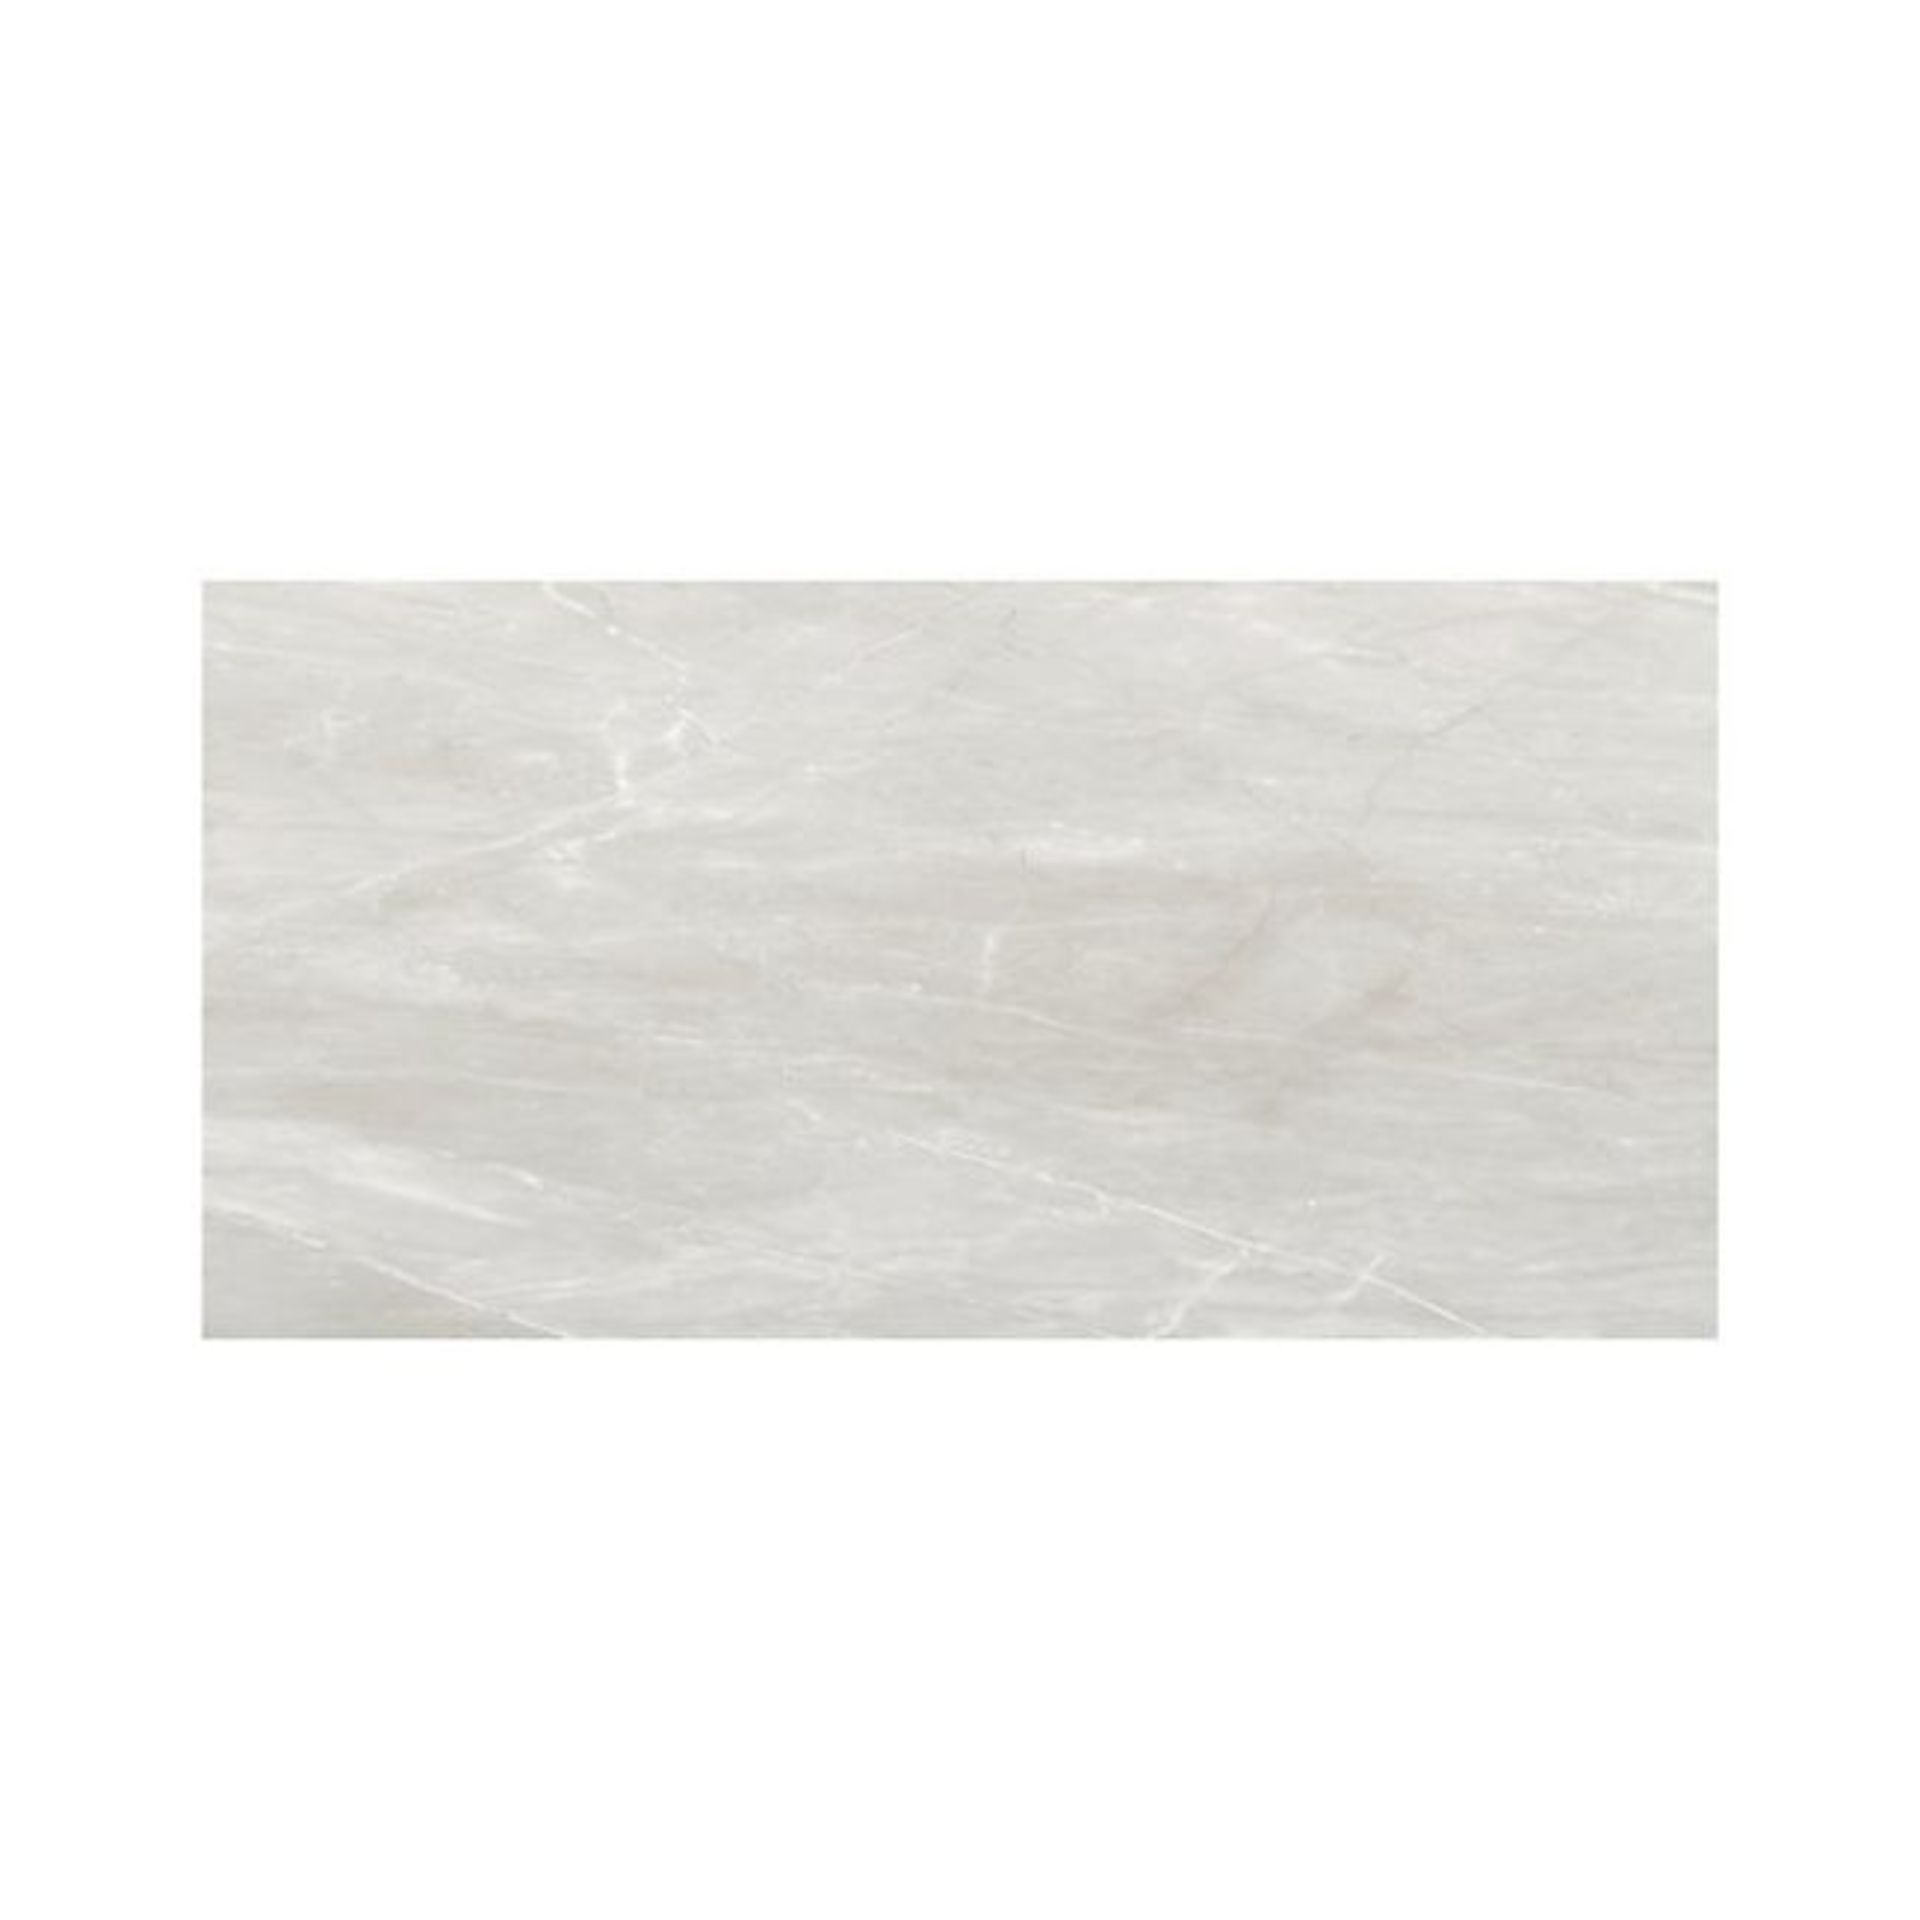 New 10.8m2 Killington Light Grey Matt Marble Effect Ceramic Floor Tile. Room Use: Any Room, Ex... - Image 2 of 2